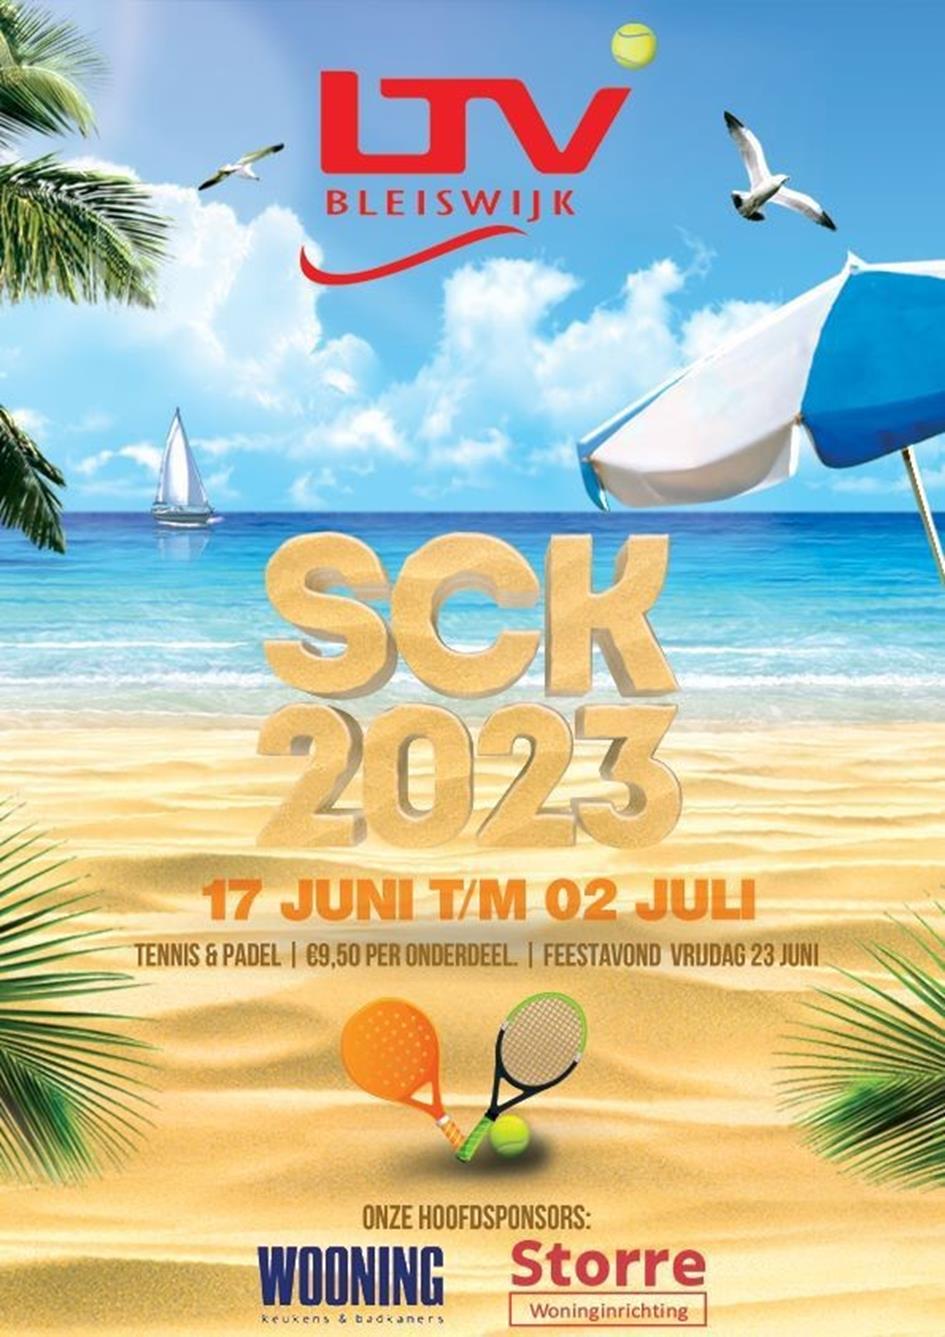 SCK 2023 uitnodiging.jpg